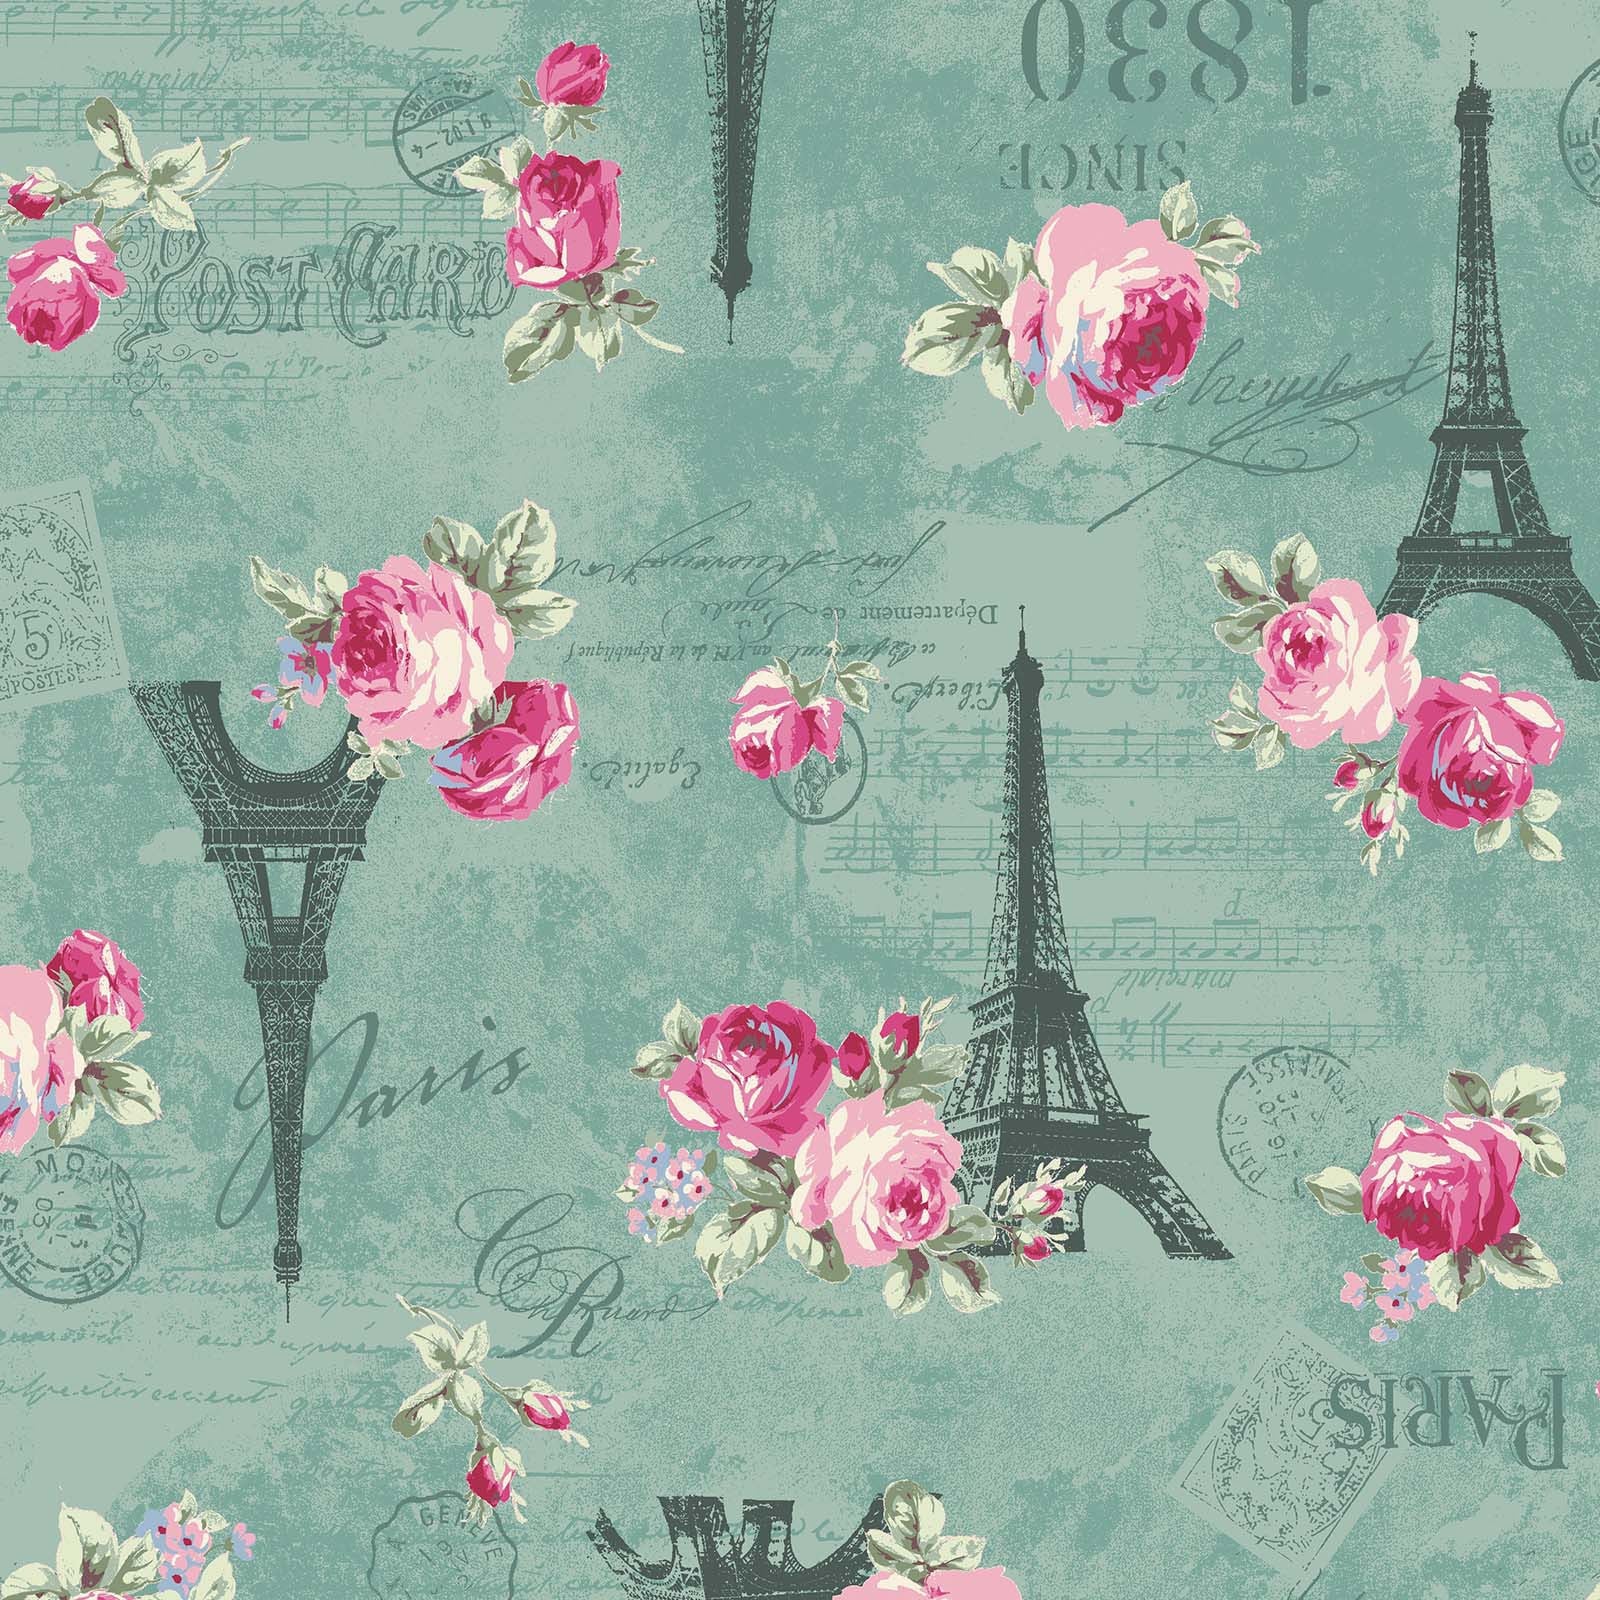 Ruru Rose Bouquet in Paris cotton fabric by Quilt Gate Ru2370-12D Eiffel Tower Roses on Green